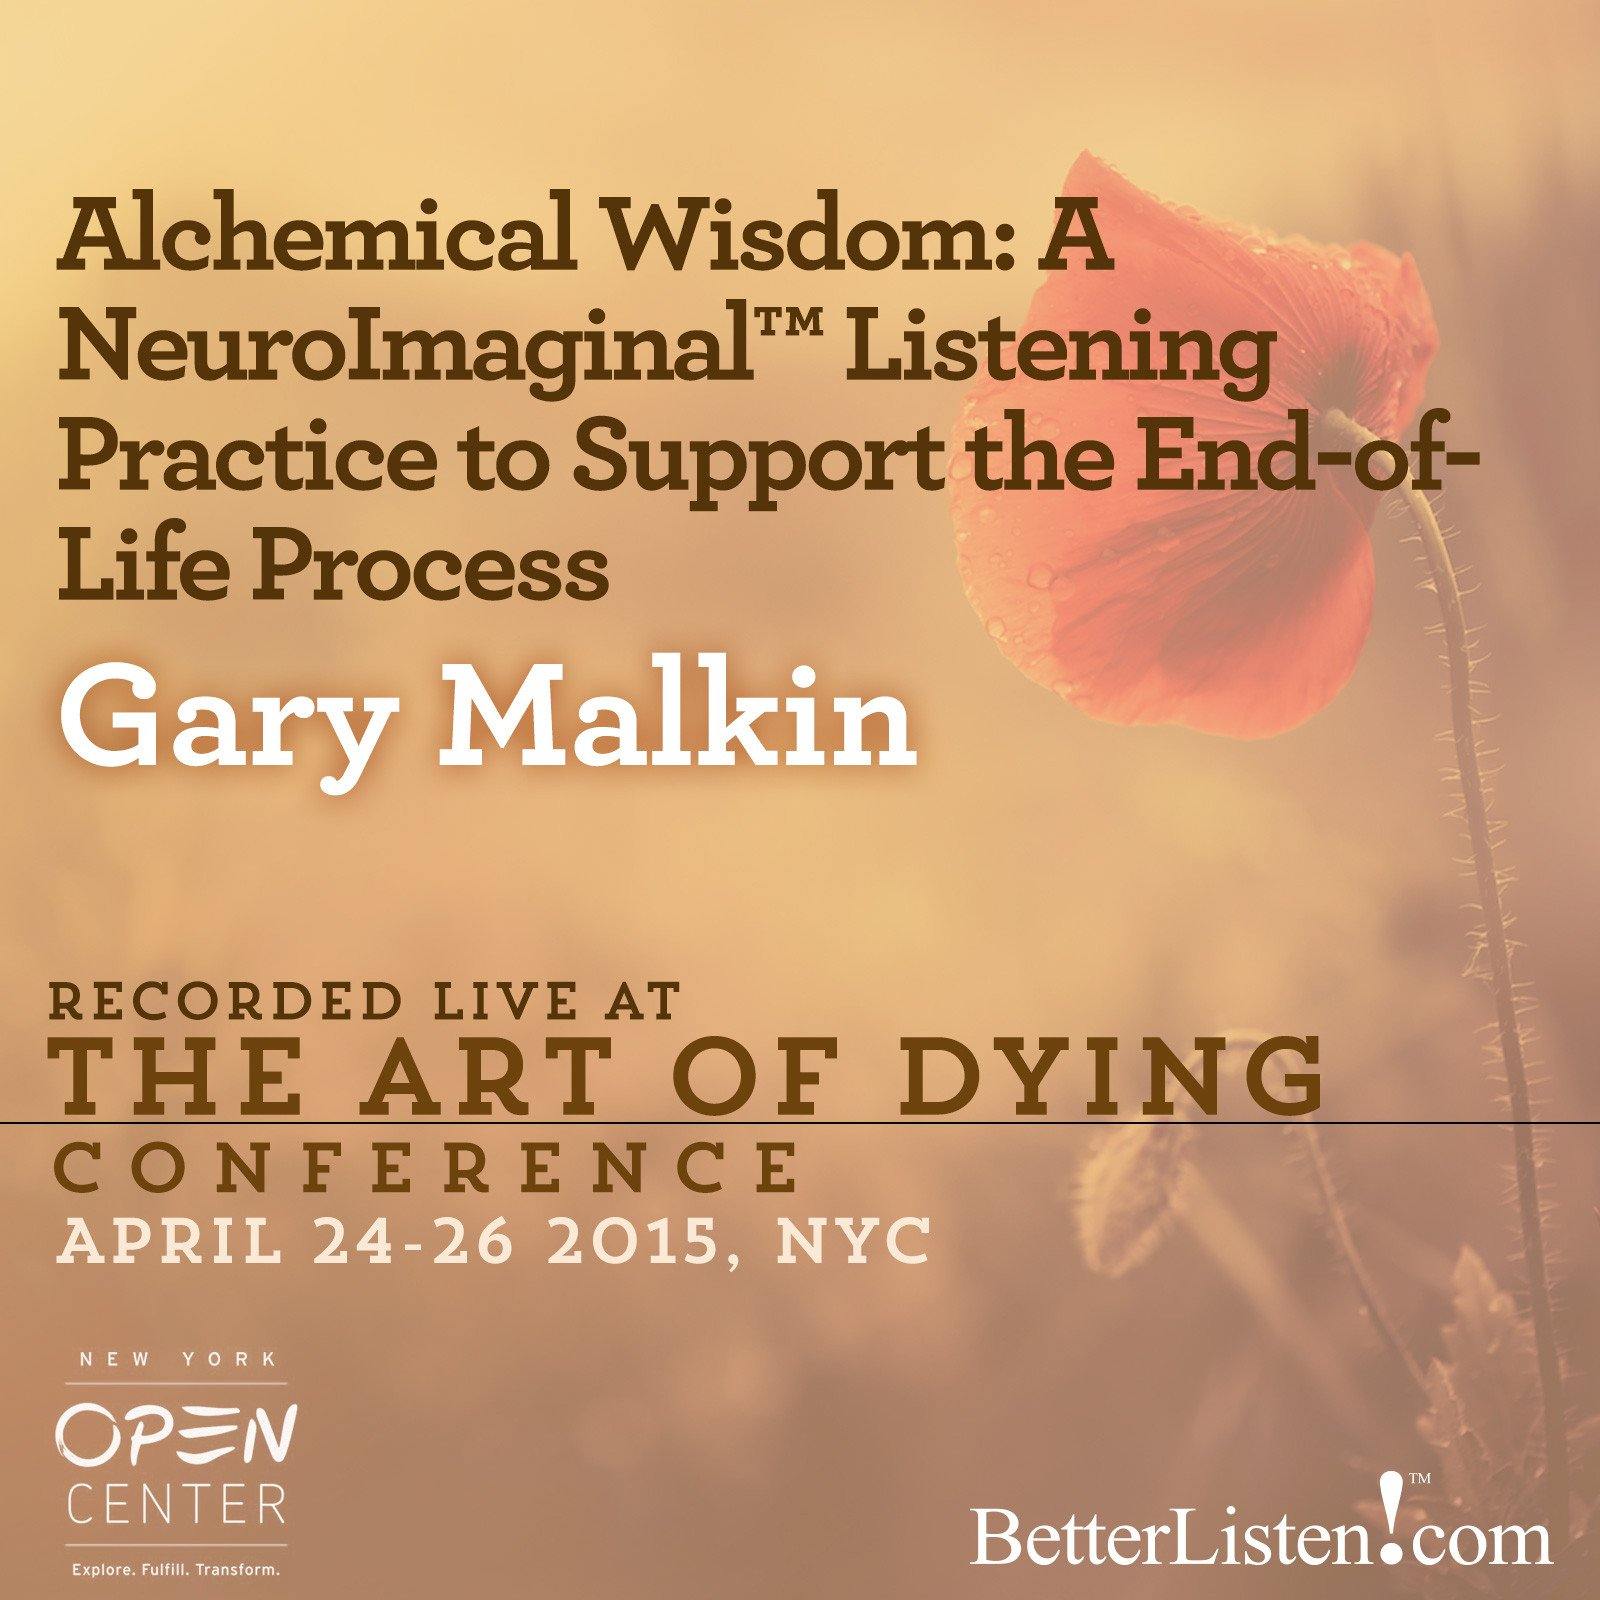 Alchemical Wisdom: A NeuroImaginal Listening Practice to Support the End- of-Life Process with Gary Malkin Audio Program BetterListen! - BetterListen!